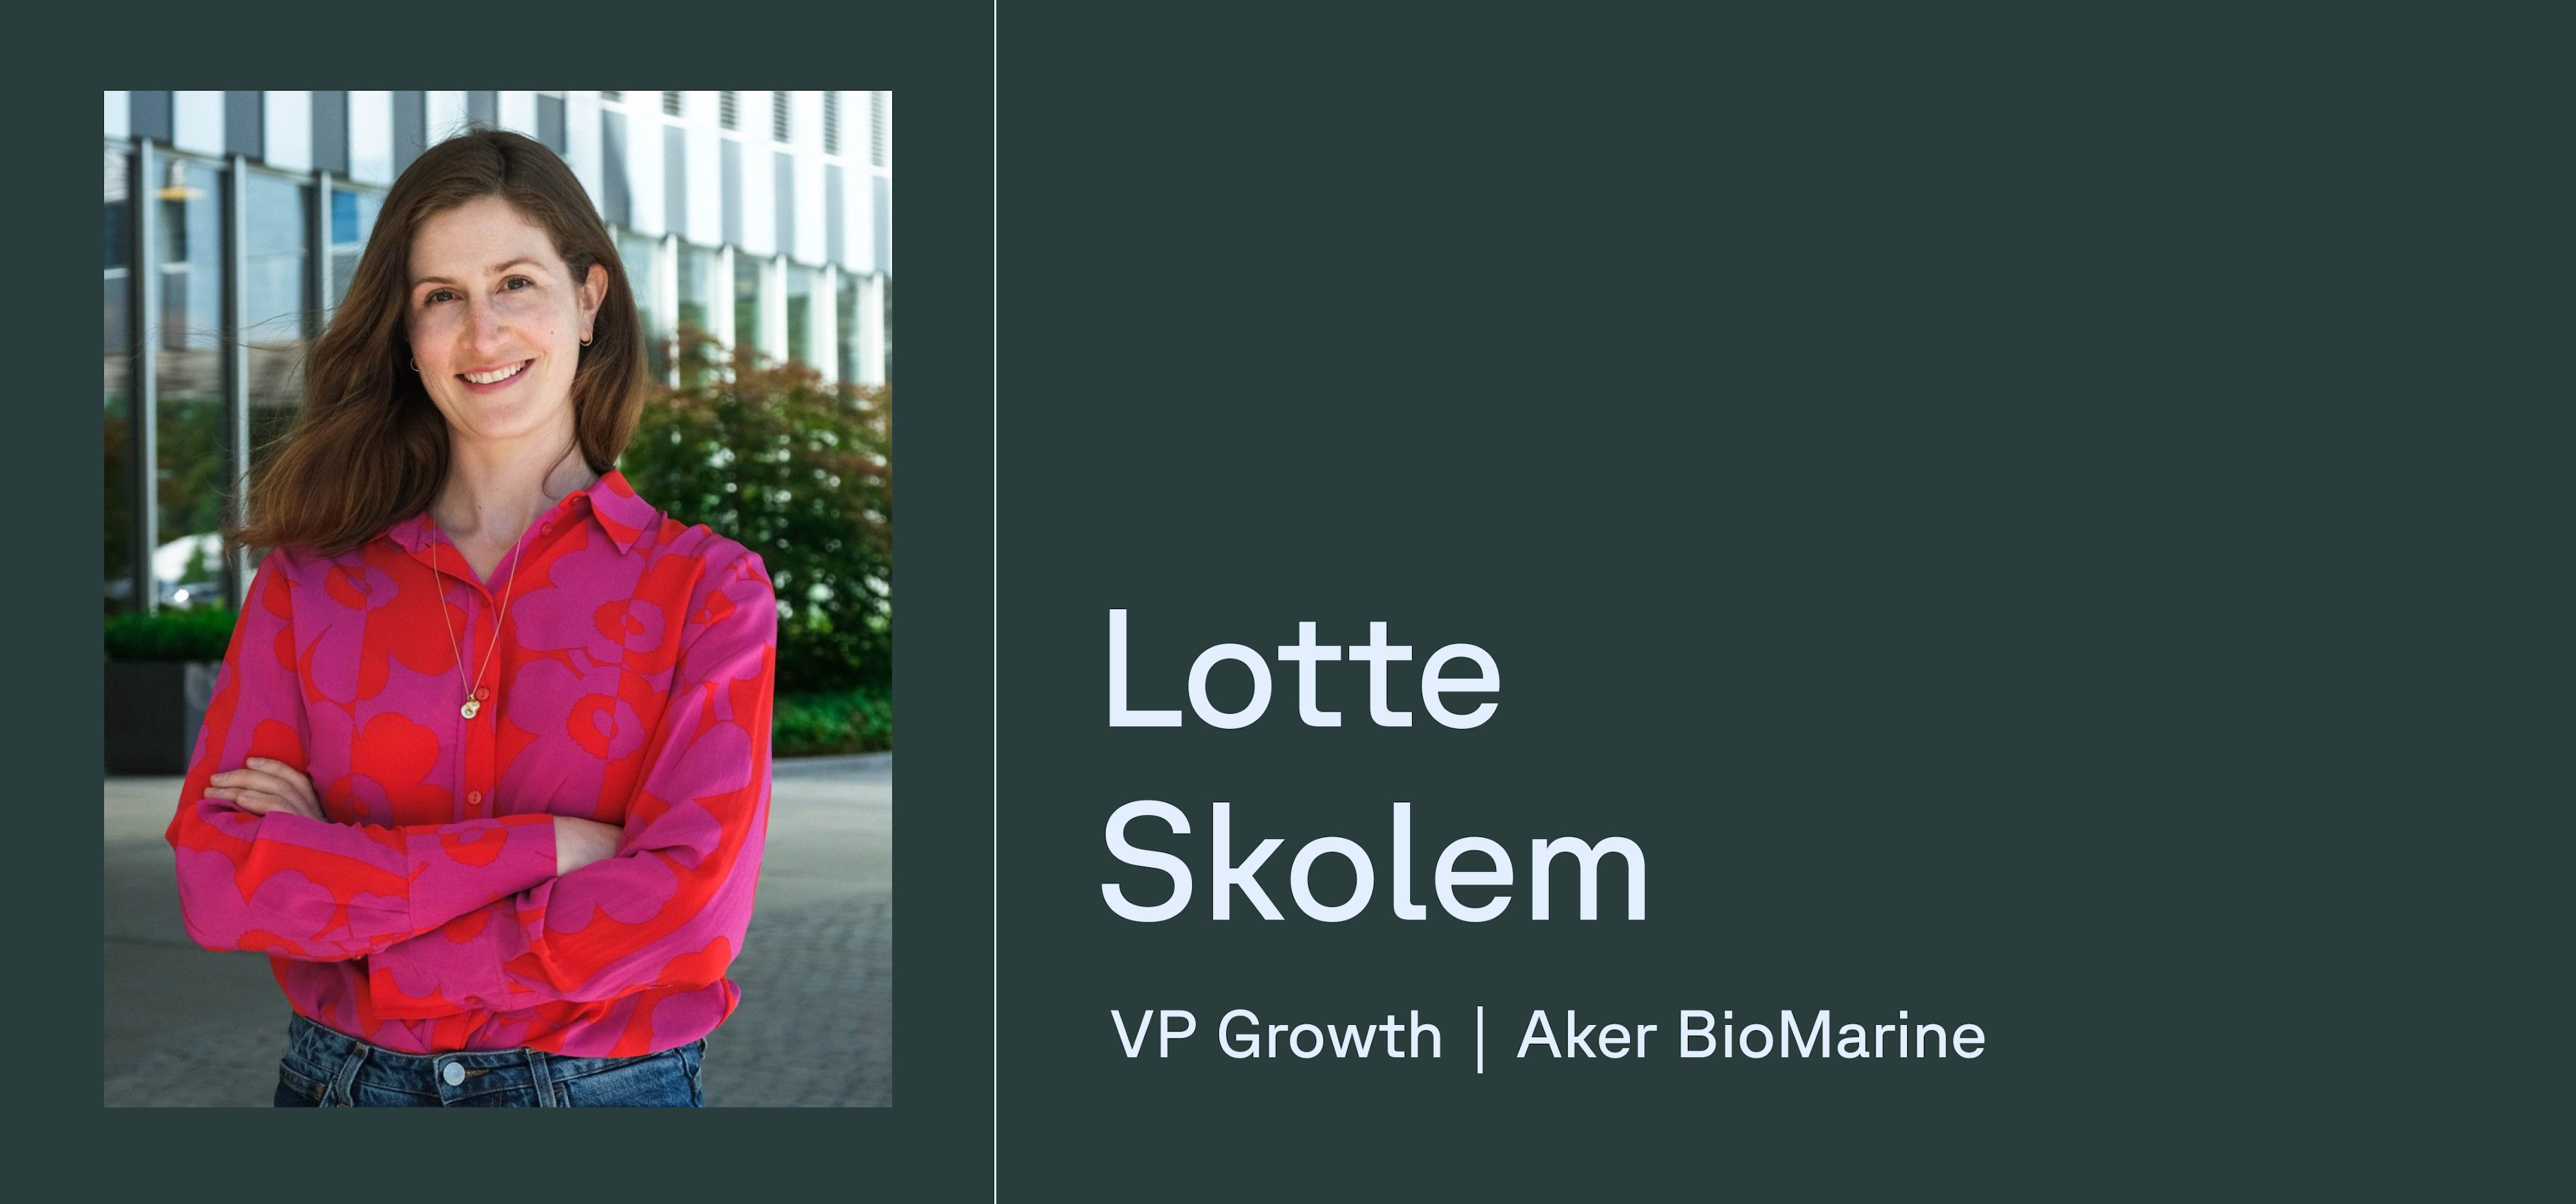 Lotte Skolem, VP Growth i Aker BioMarine 